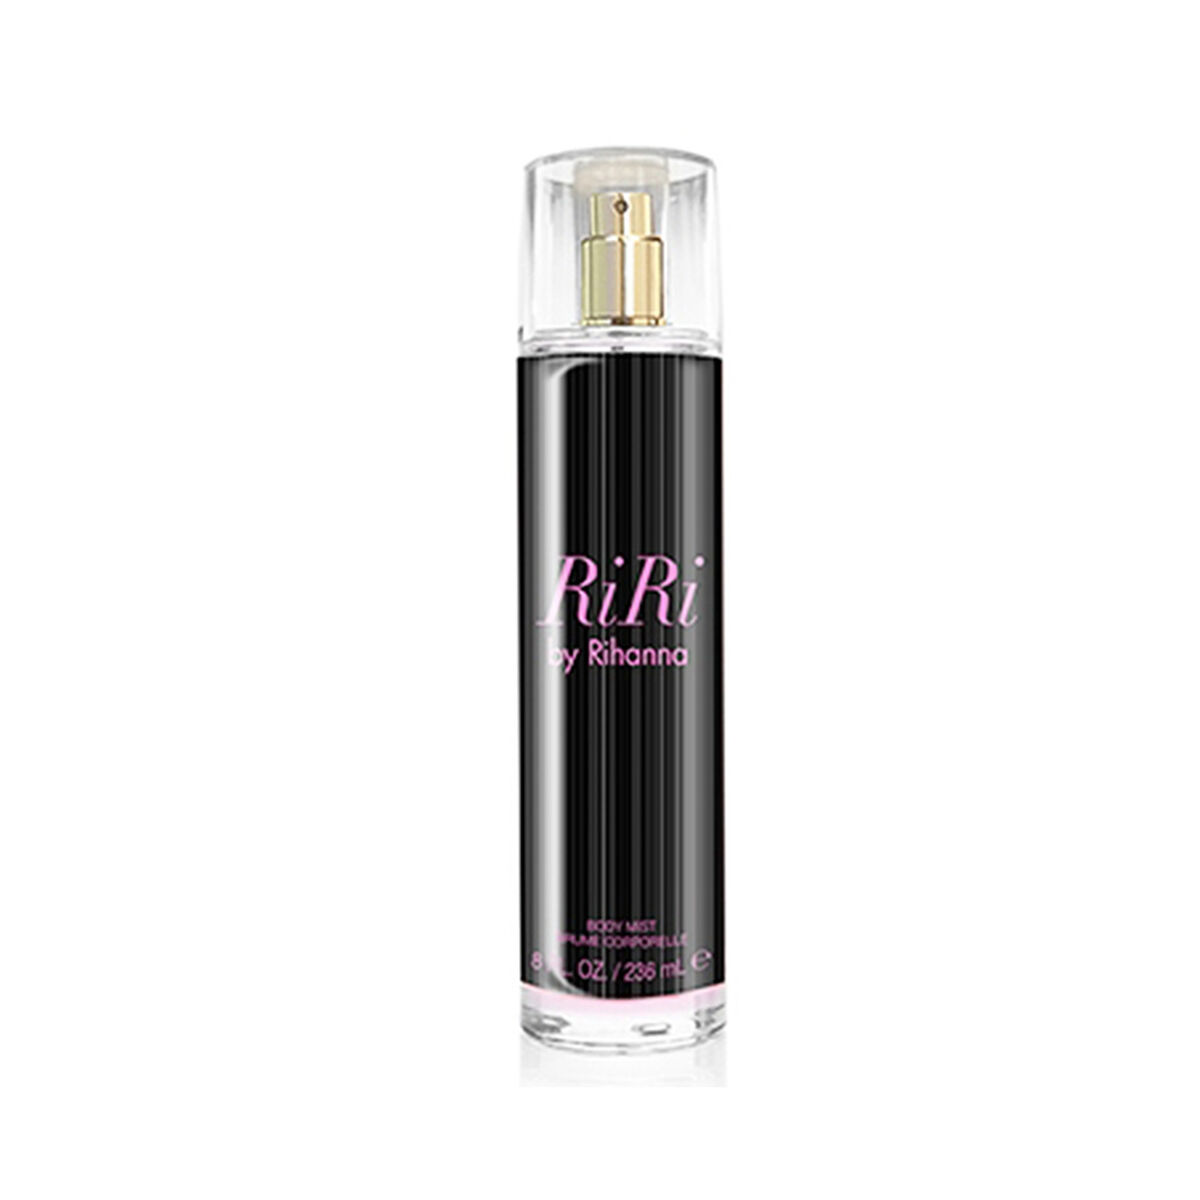 Perfume Rihanna Riri Body Mist 236 ml